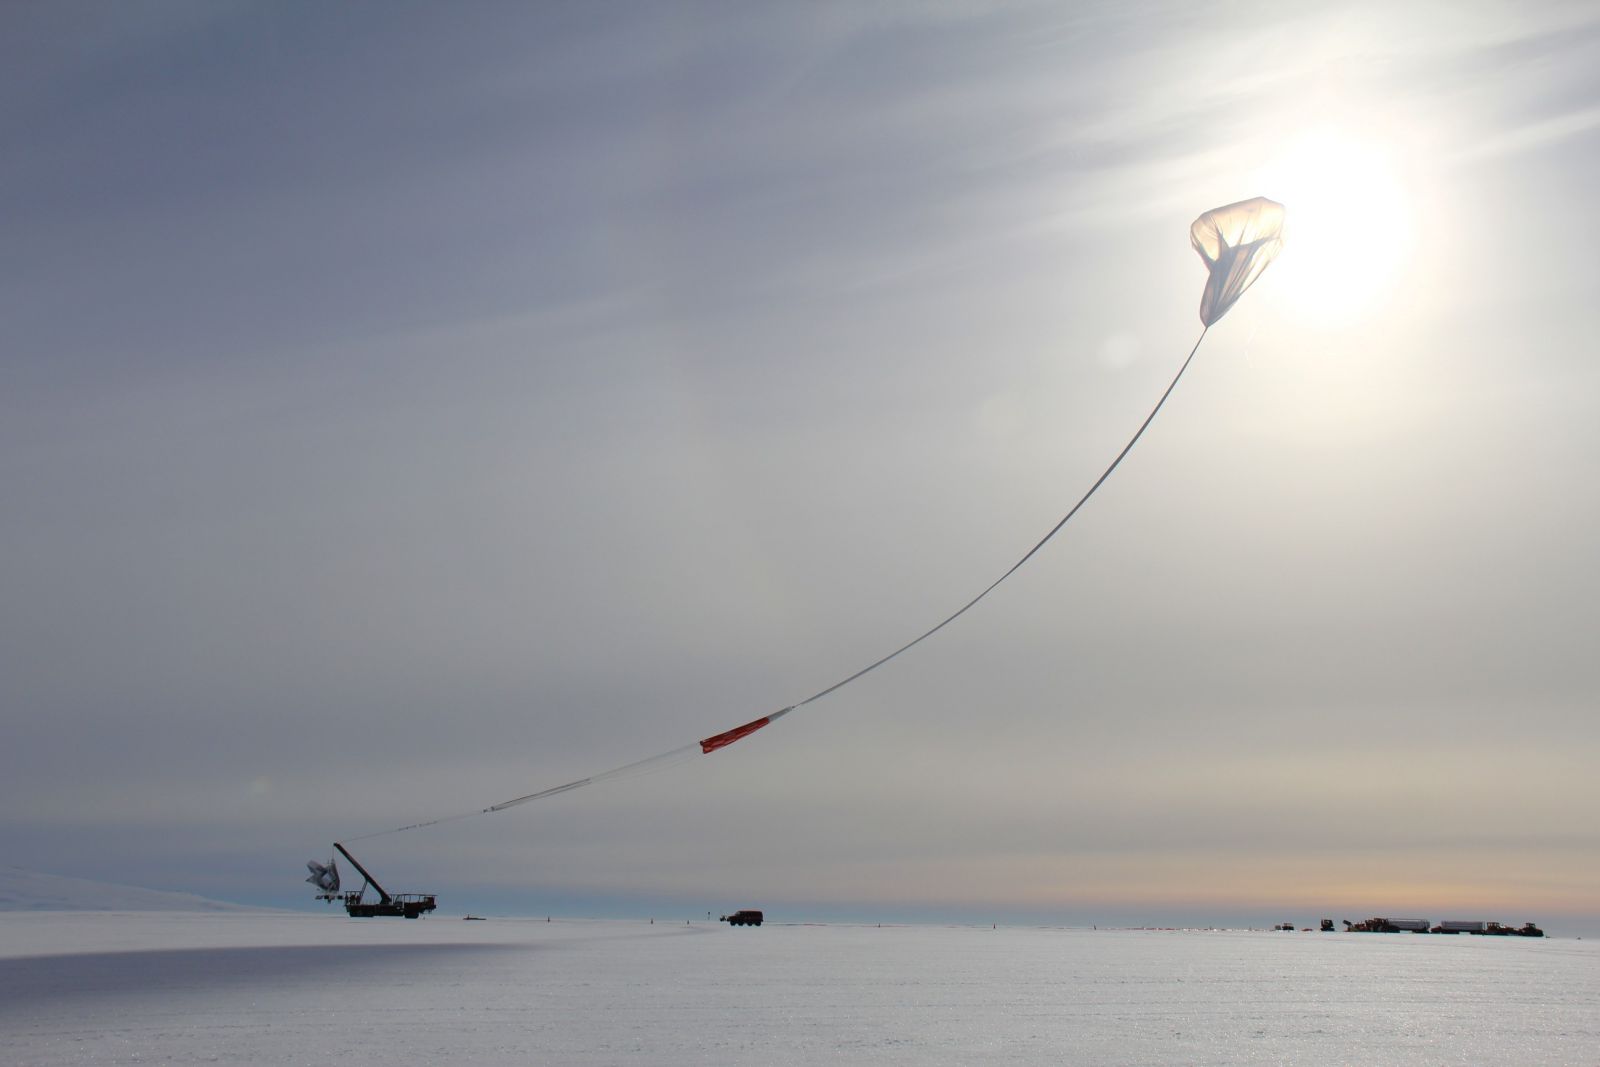 2012 Launch of the BLASTPol balloon-borne telescope from NASA's Long Duration Balloon facility near McMurdo Station, Antarctica (Image credit: Steven Benton)